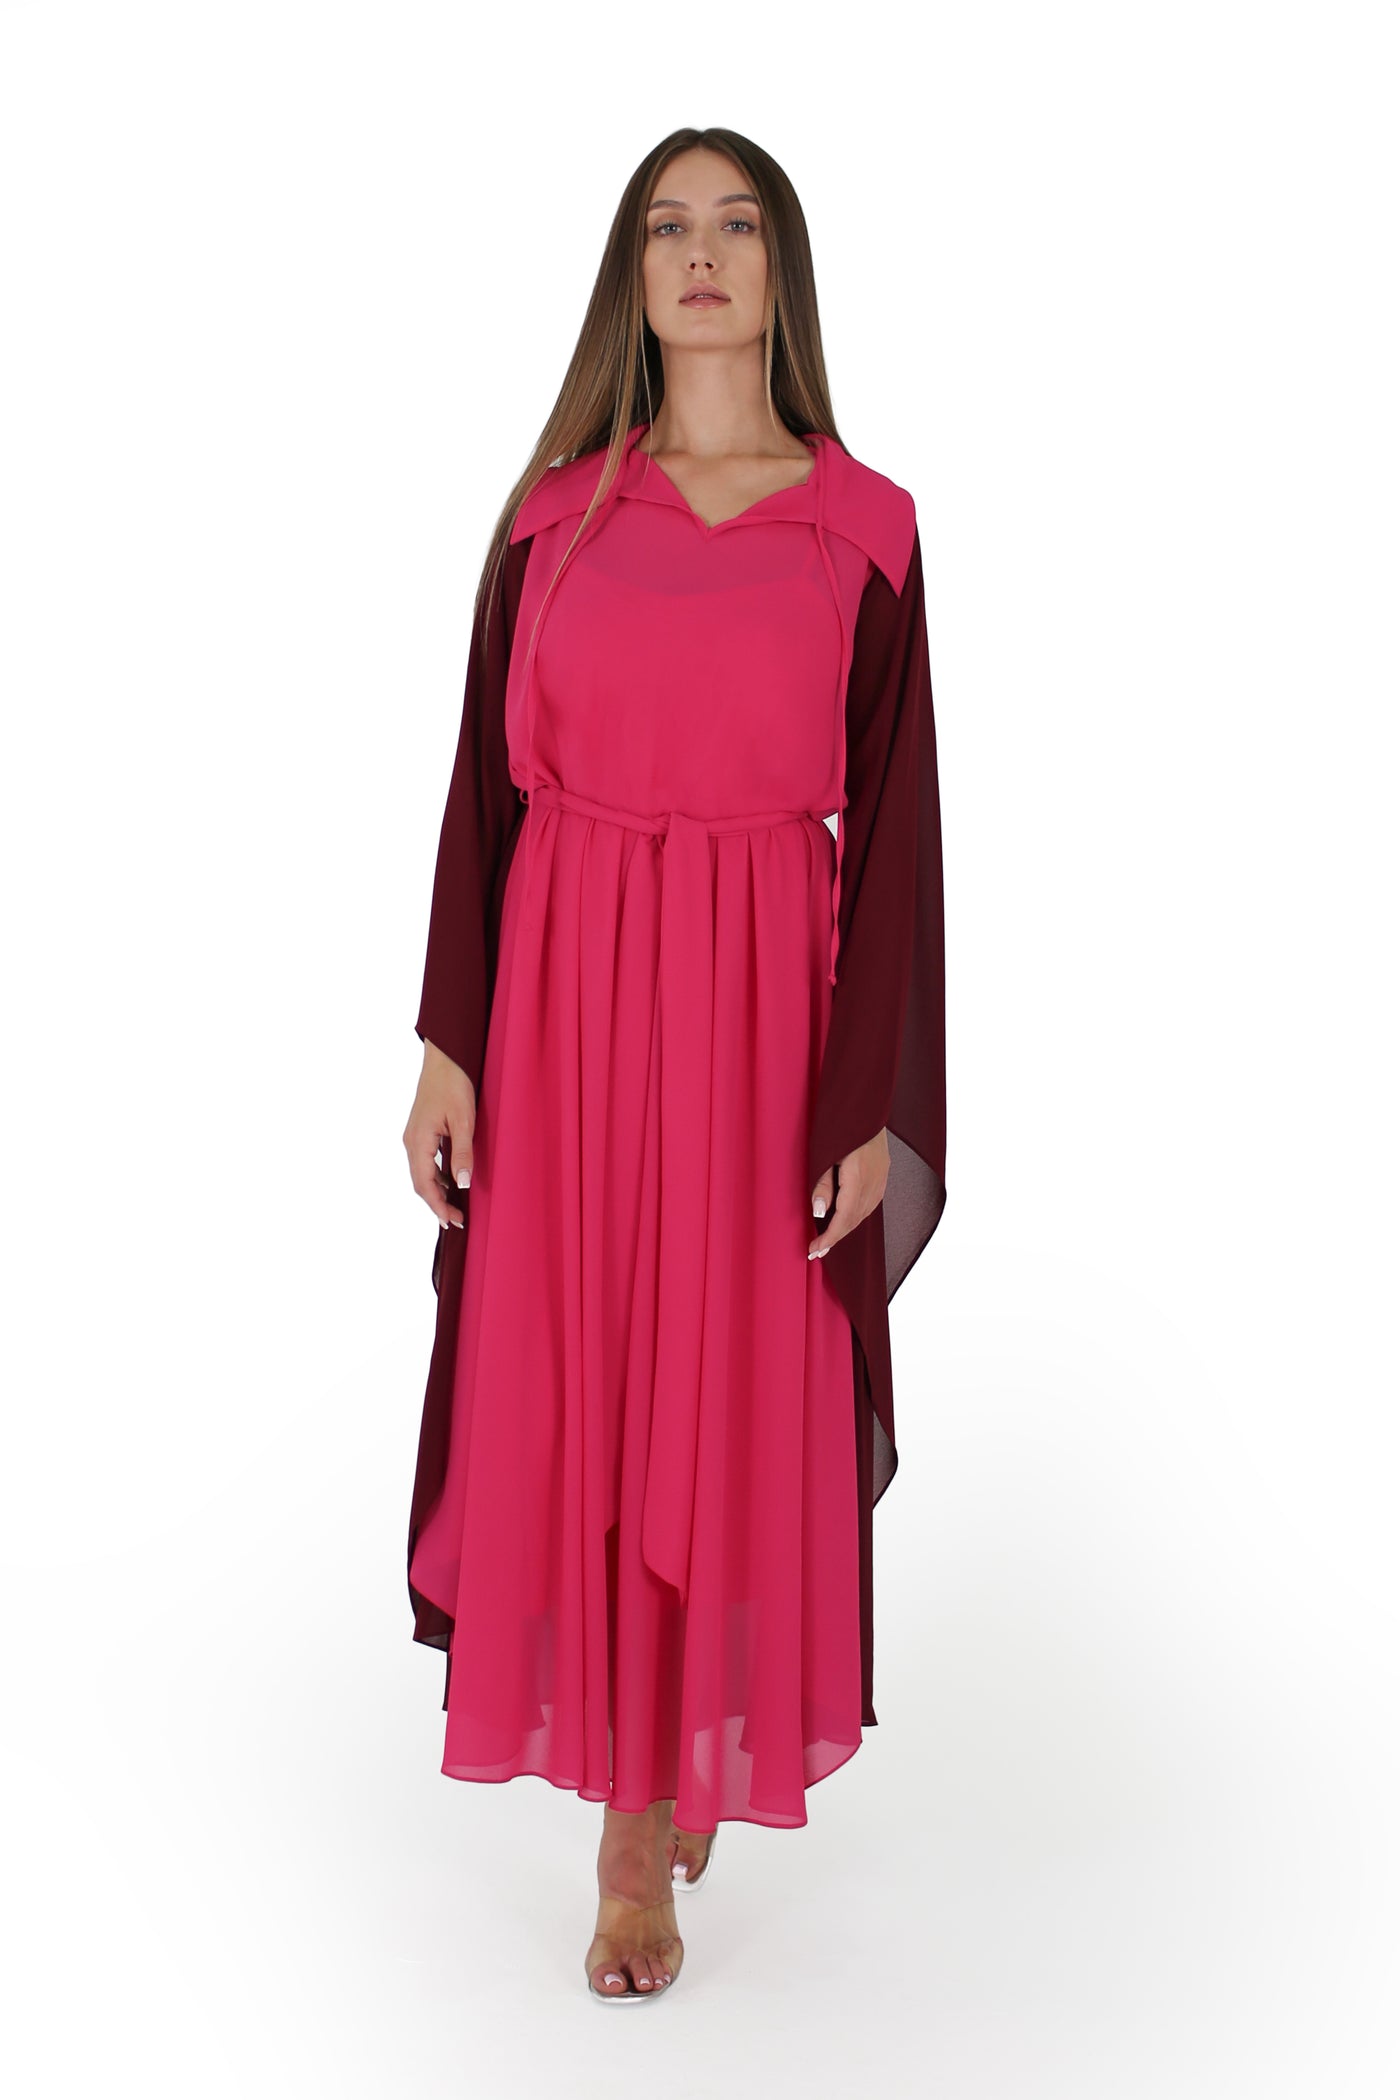 BARUNI CHER REVERSIBLE DRESS فستان باروني وجهين